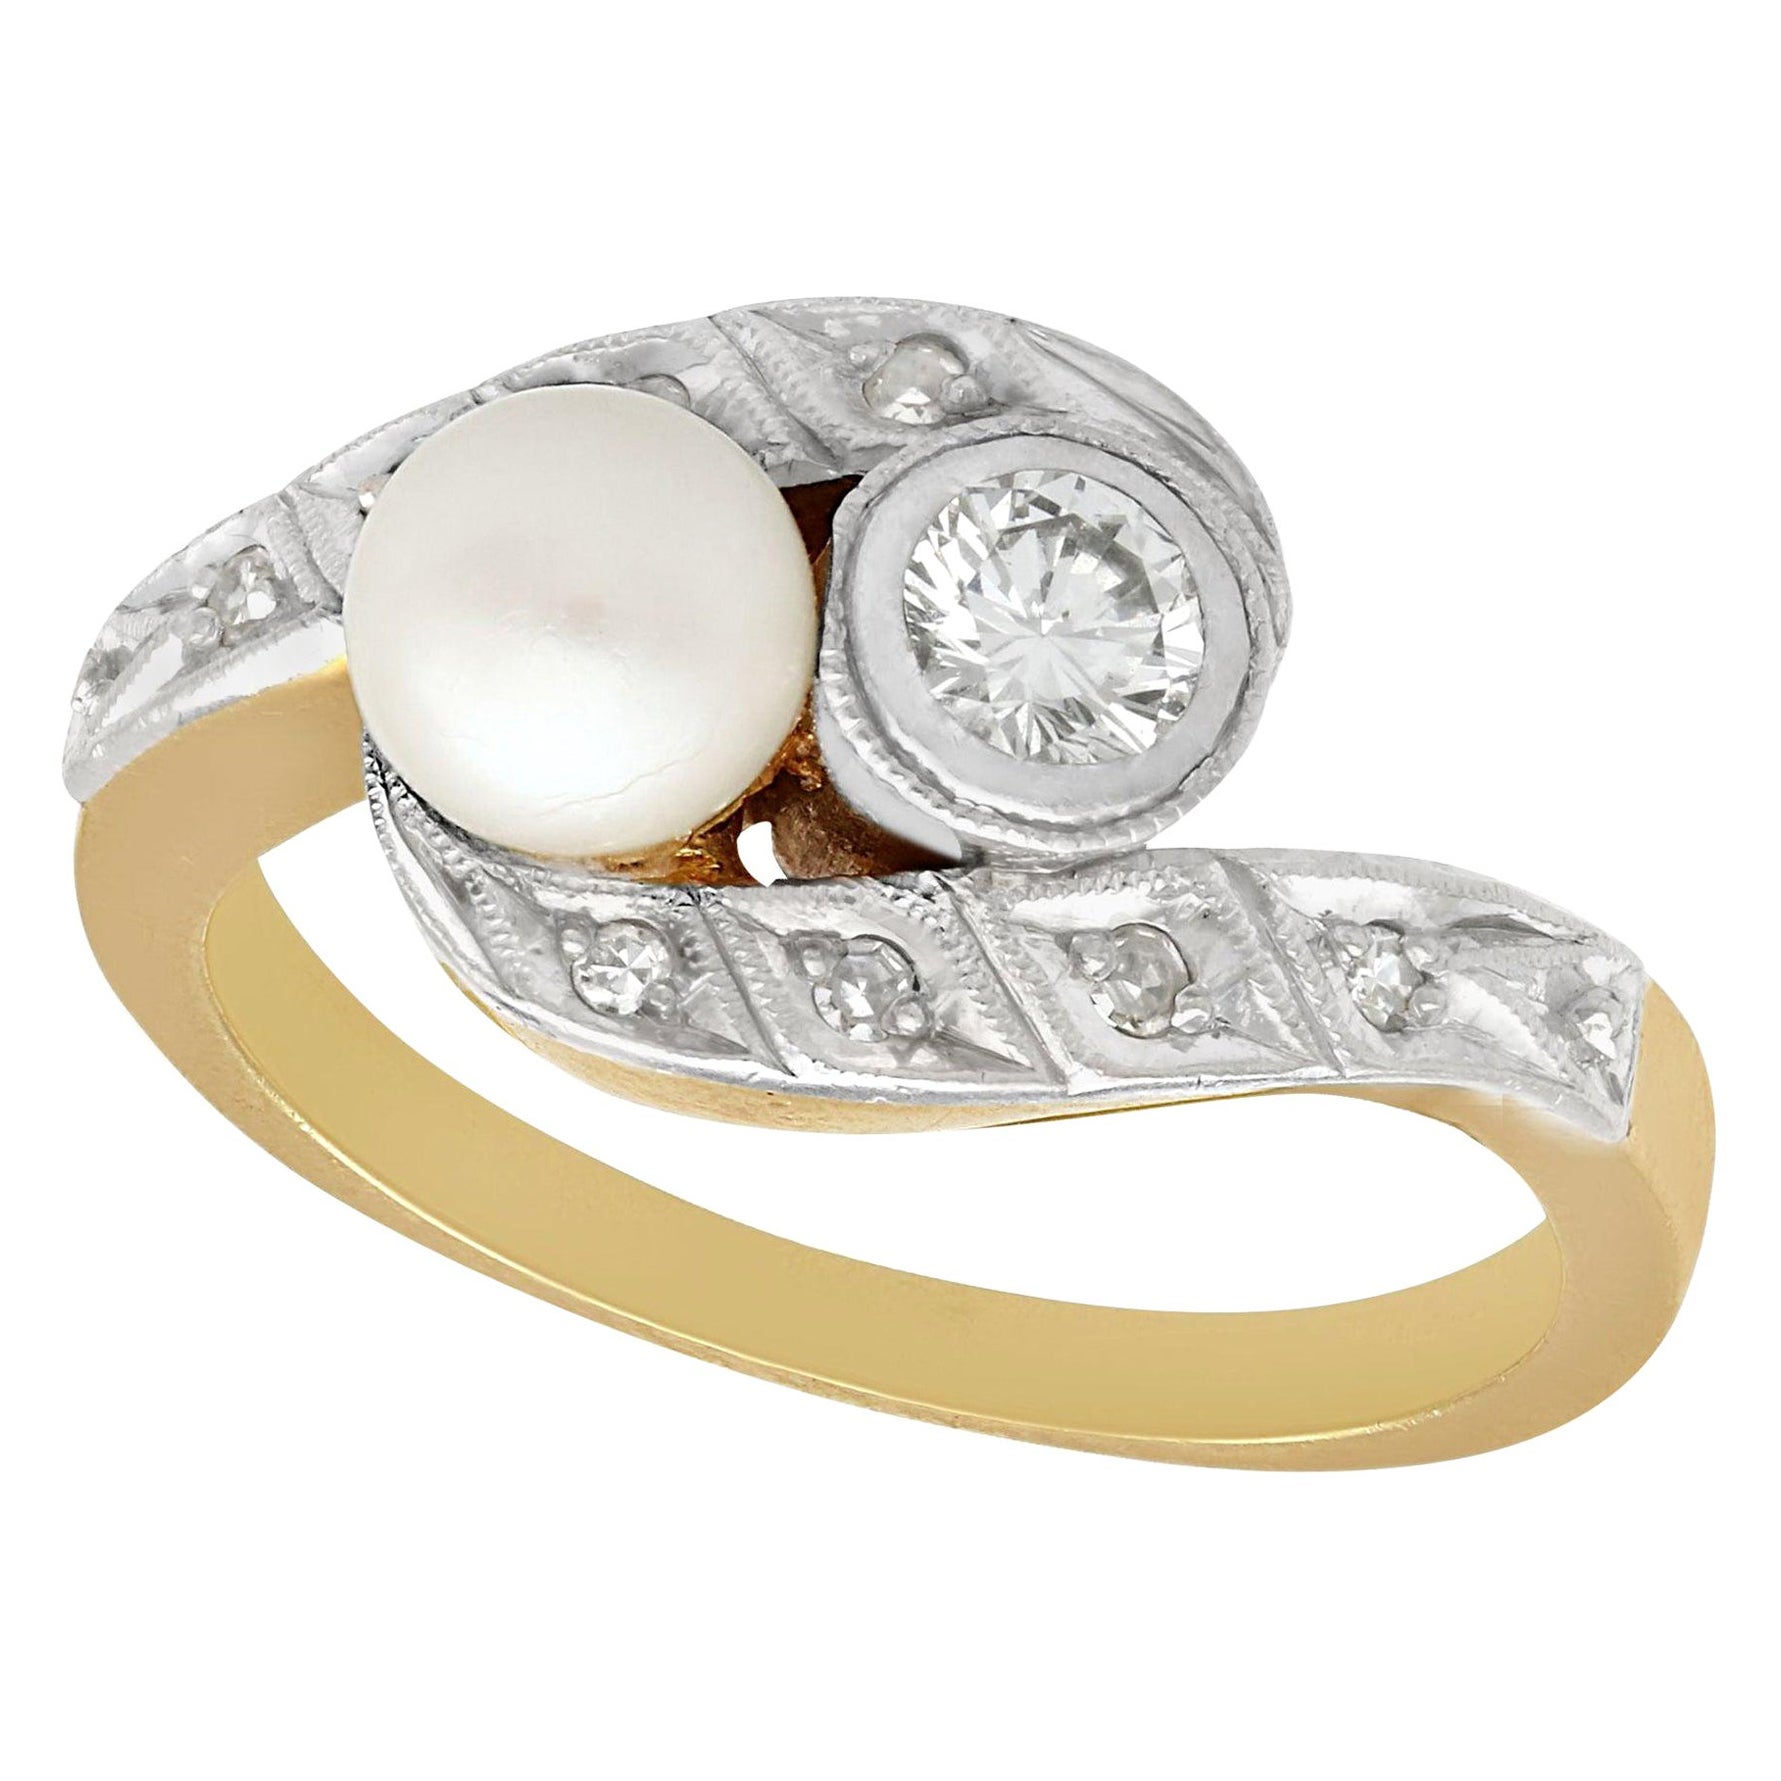 1930s 0.37 Carat Diamond and Pearl 14K Yellow Gold Twist Ring